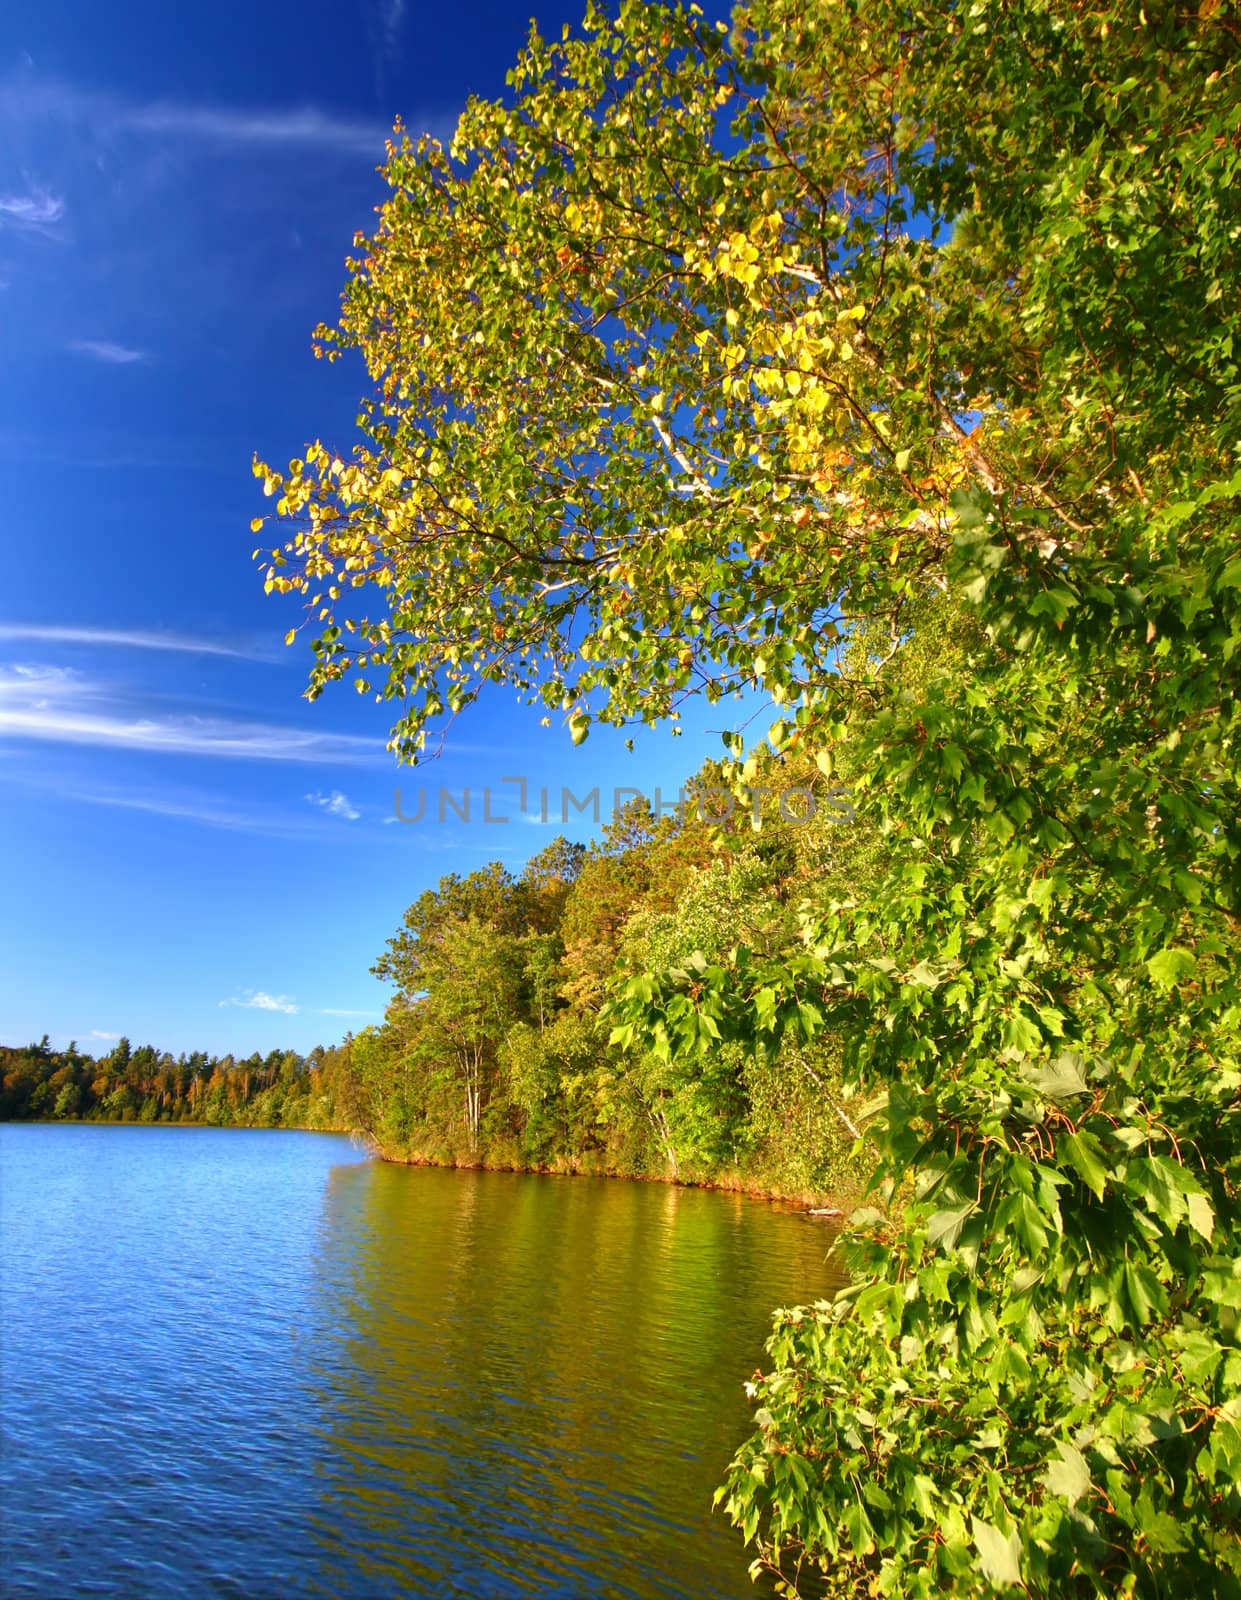 Beautiful foliage along the shoreline of Sweeney Lake in northwoods Wisconsin.